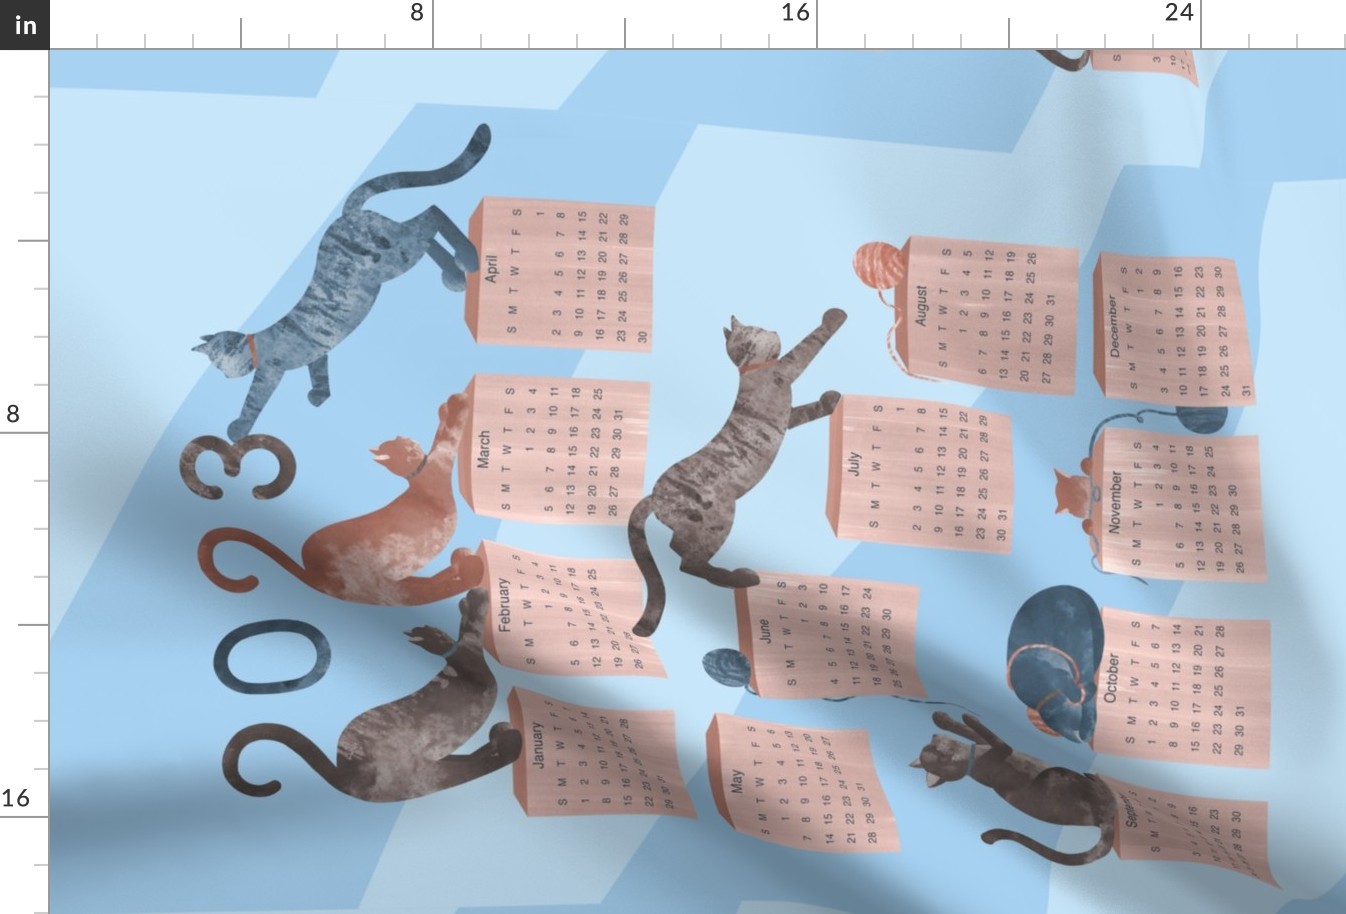 2023 Cats Calendar